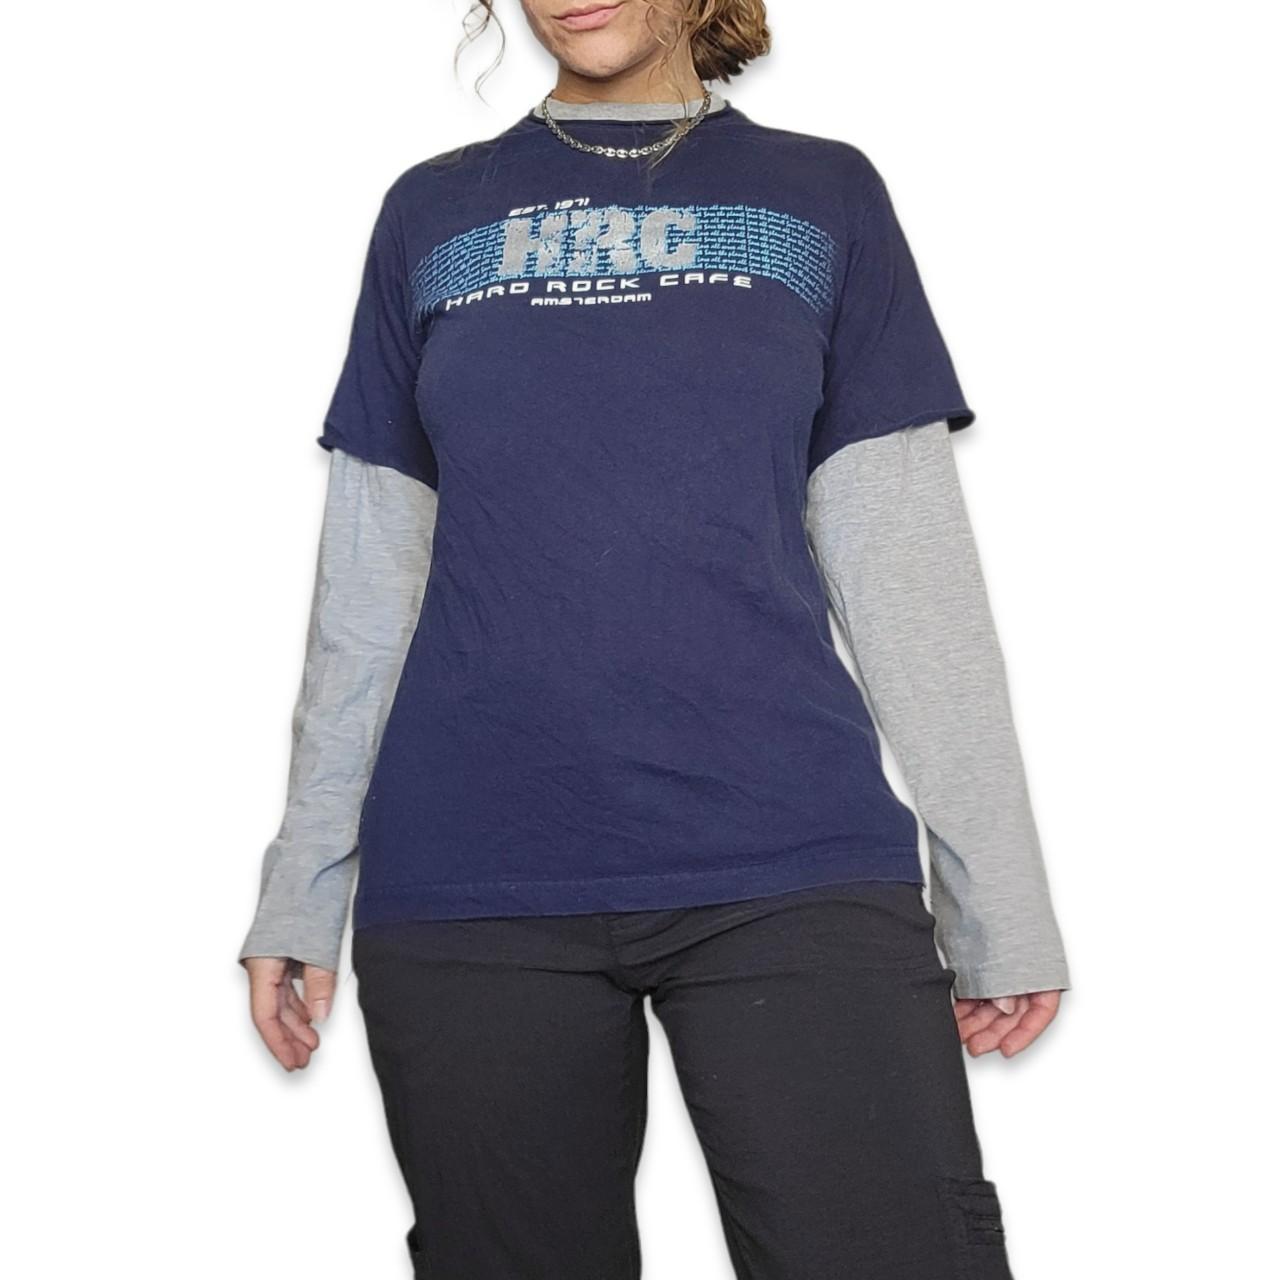 Hard Rock Cafe Women's Grey and Navy T-shirt (2)